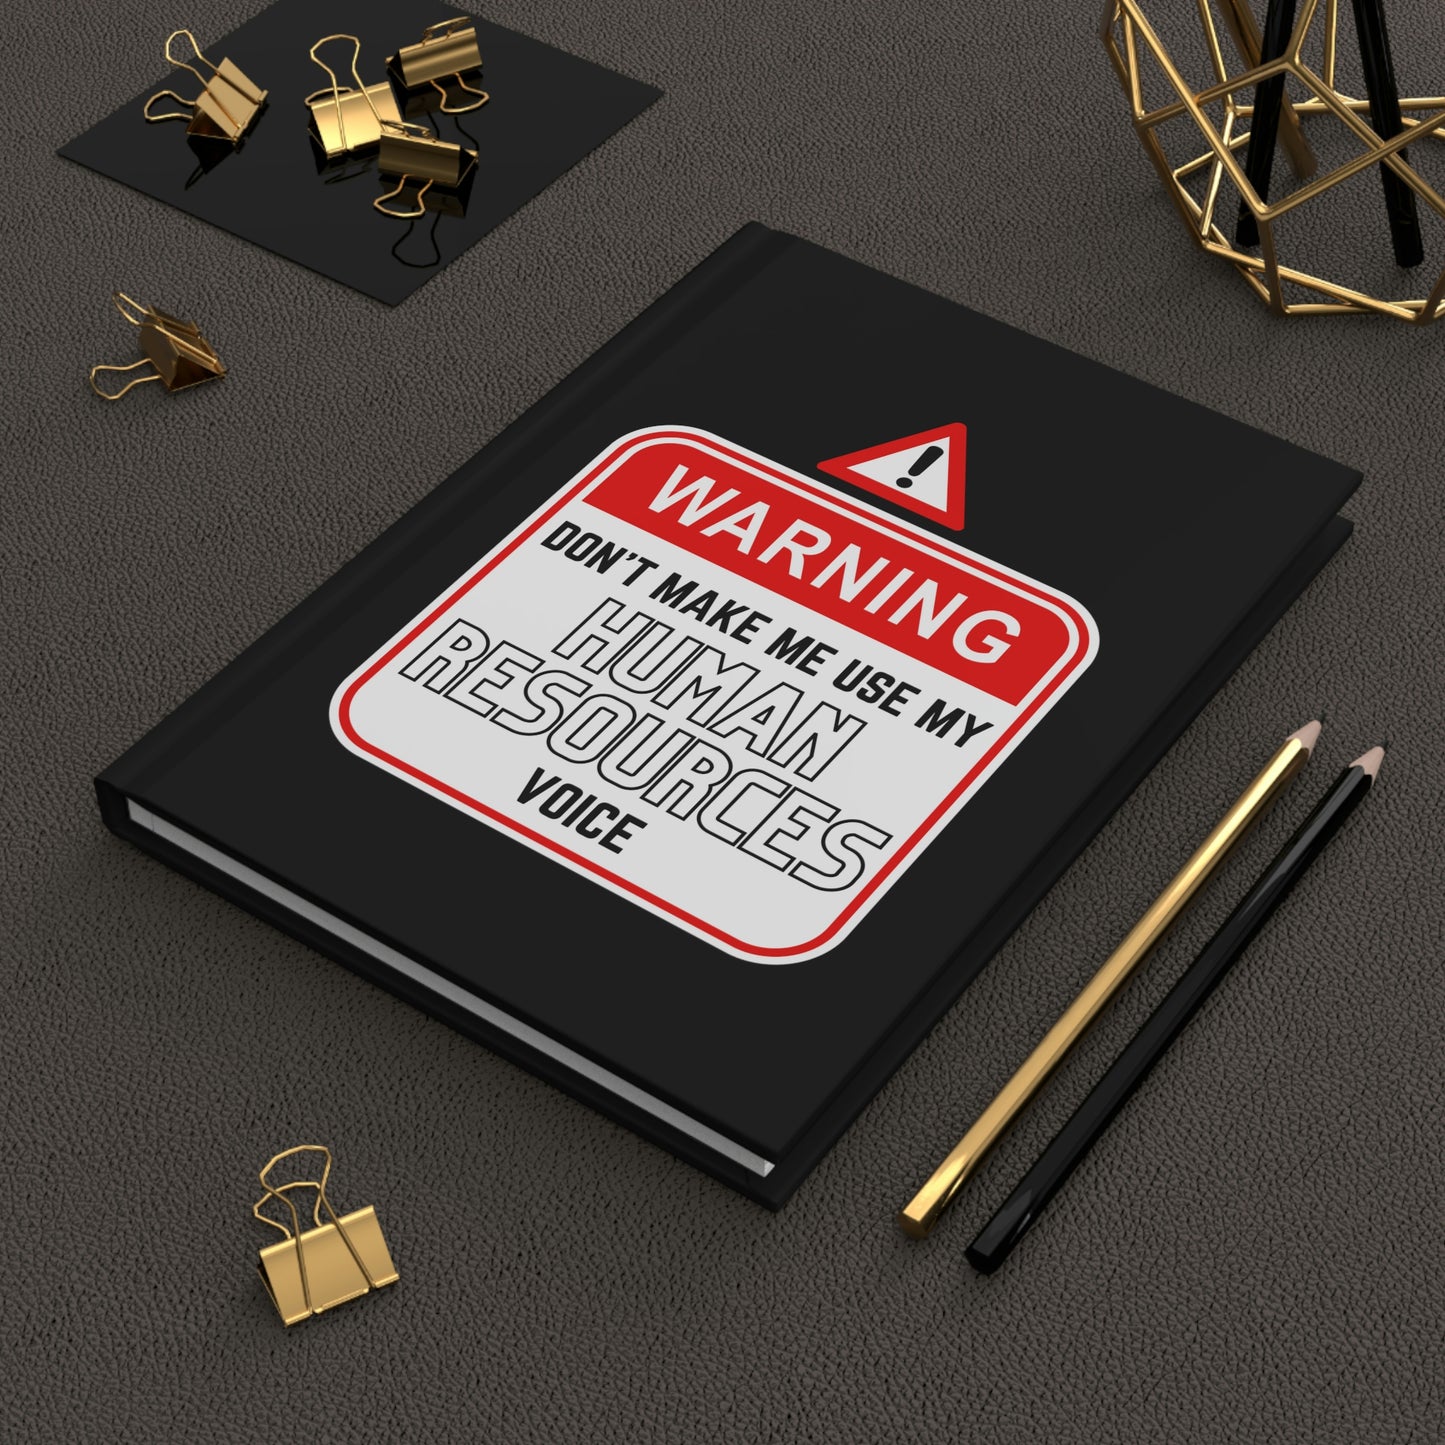 "Warning HR Voice" Hardcover Journal - Matte